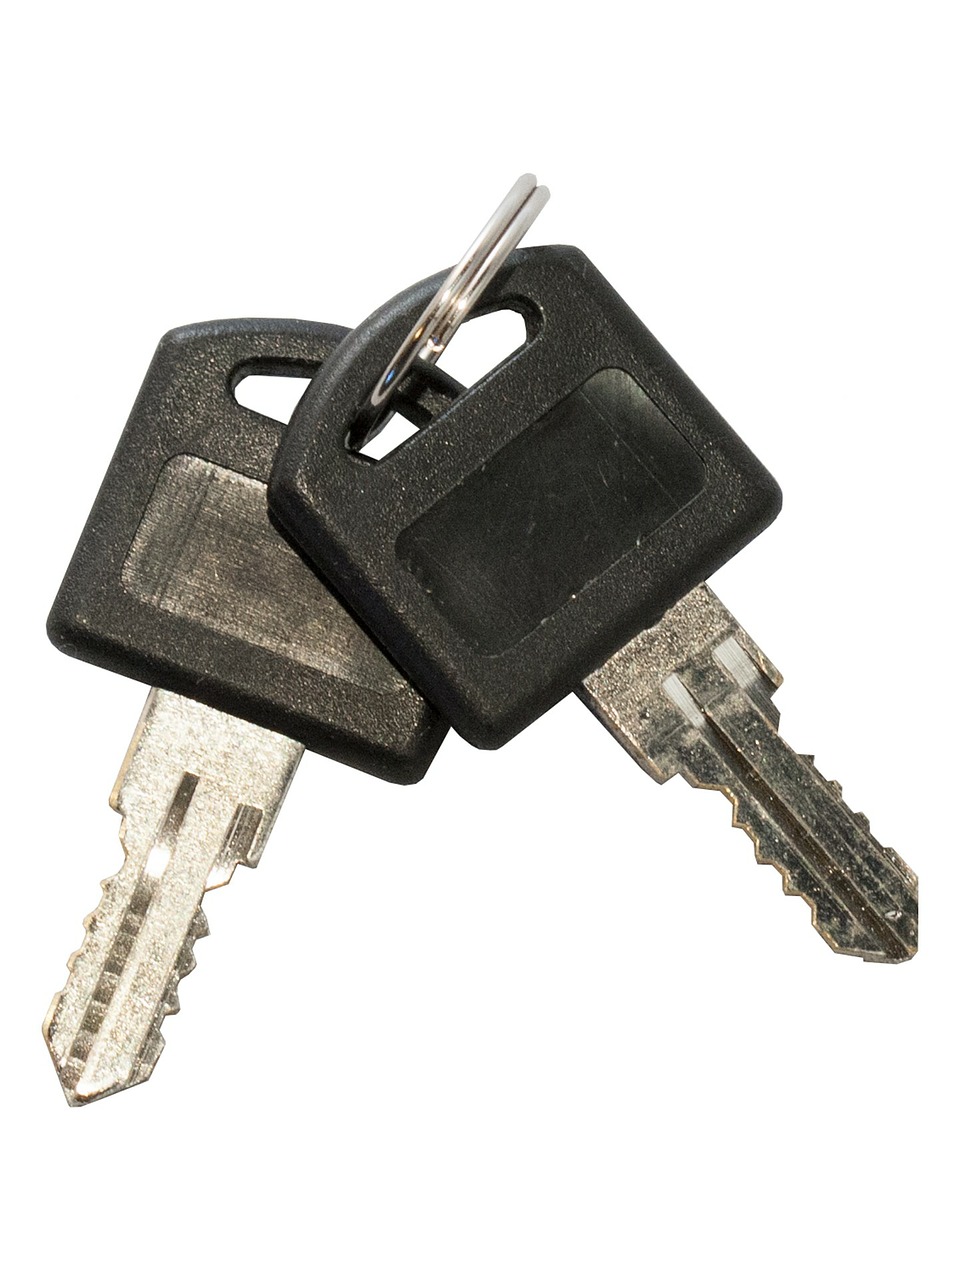 key keys keychain free photo